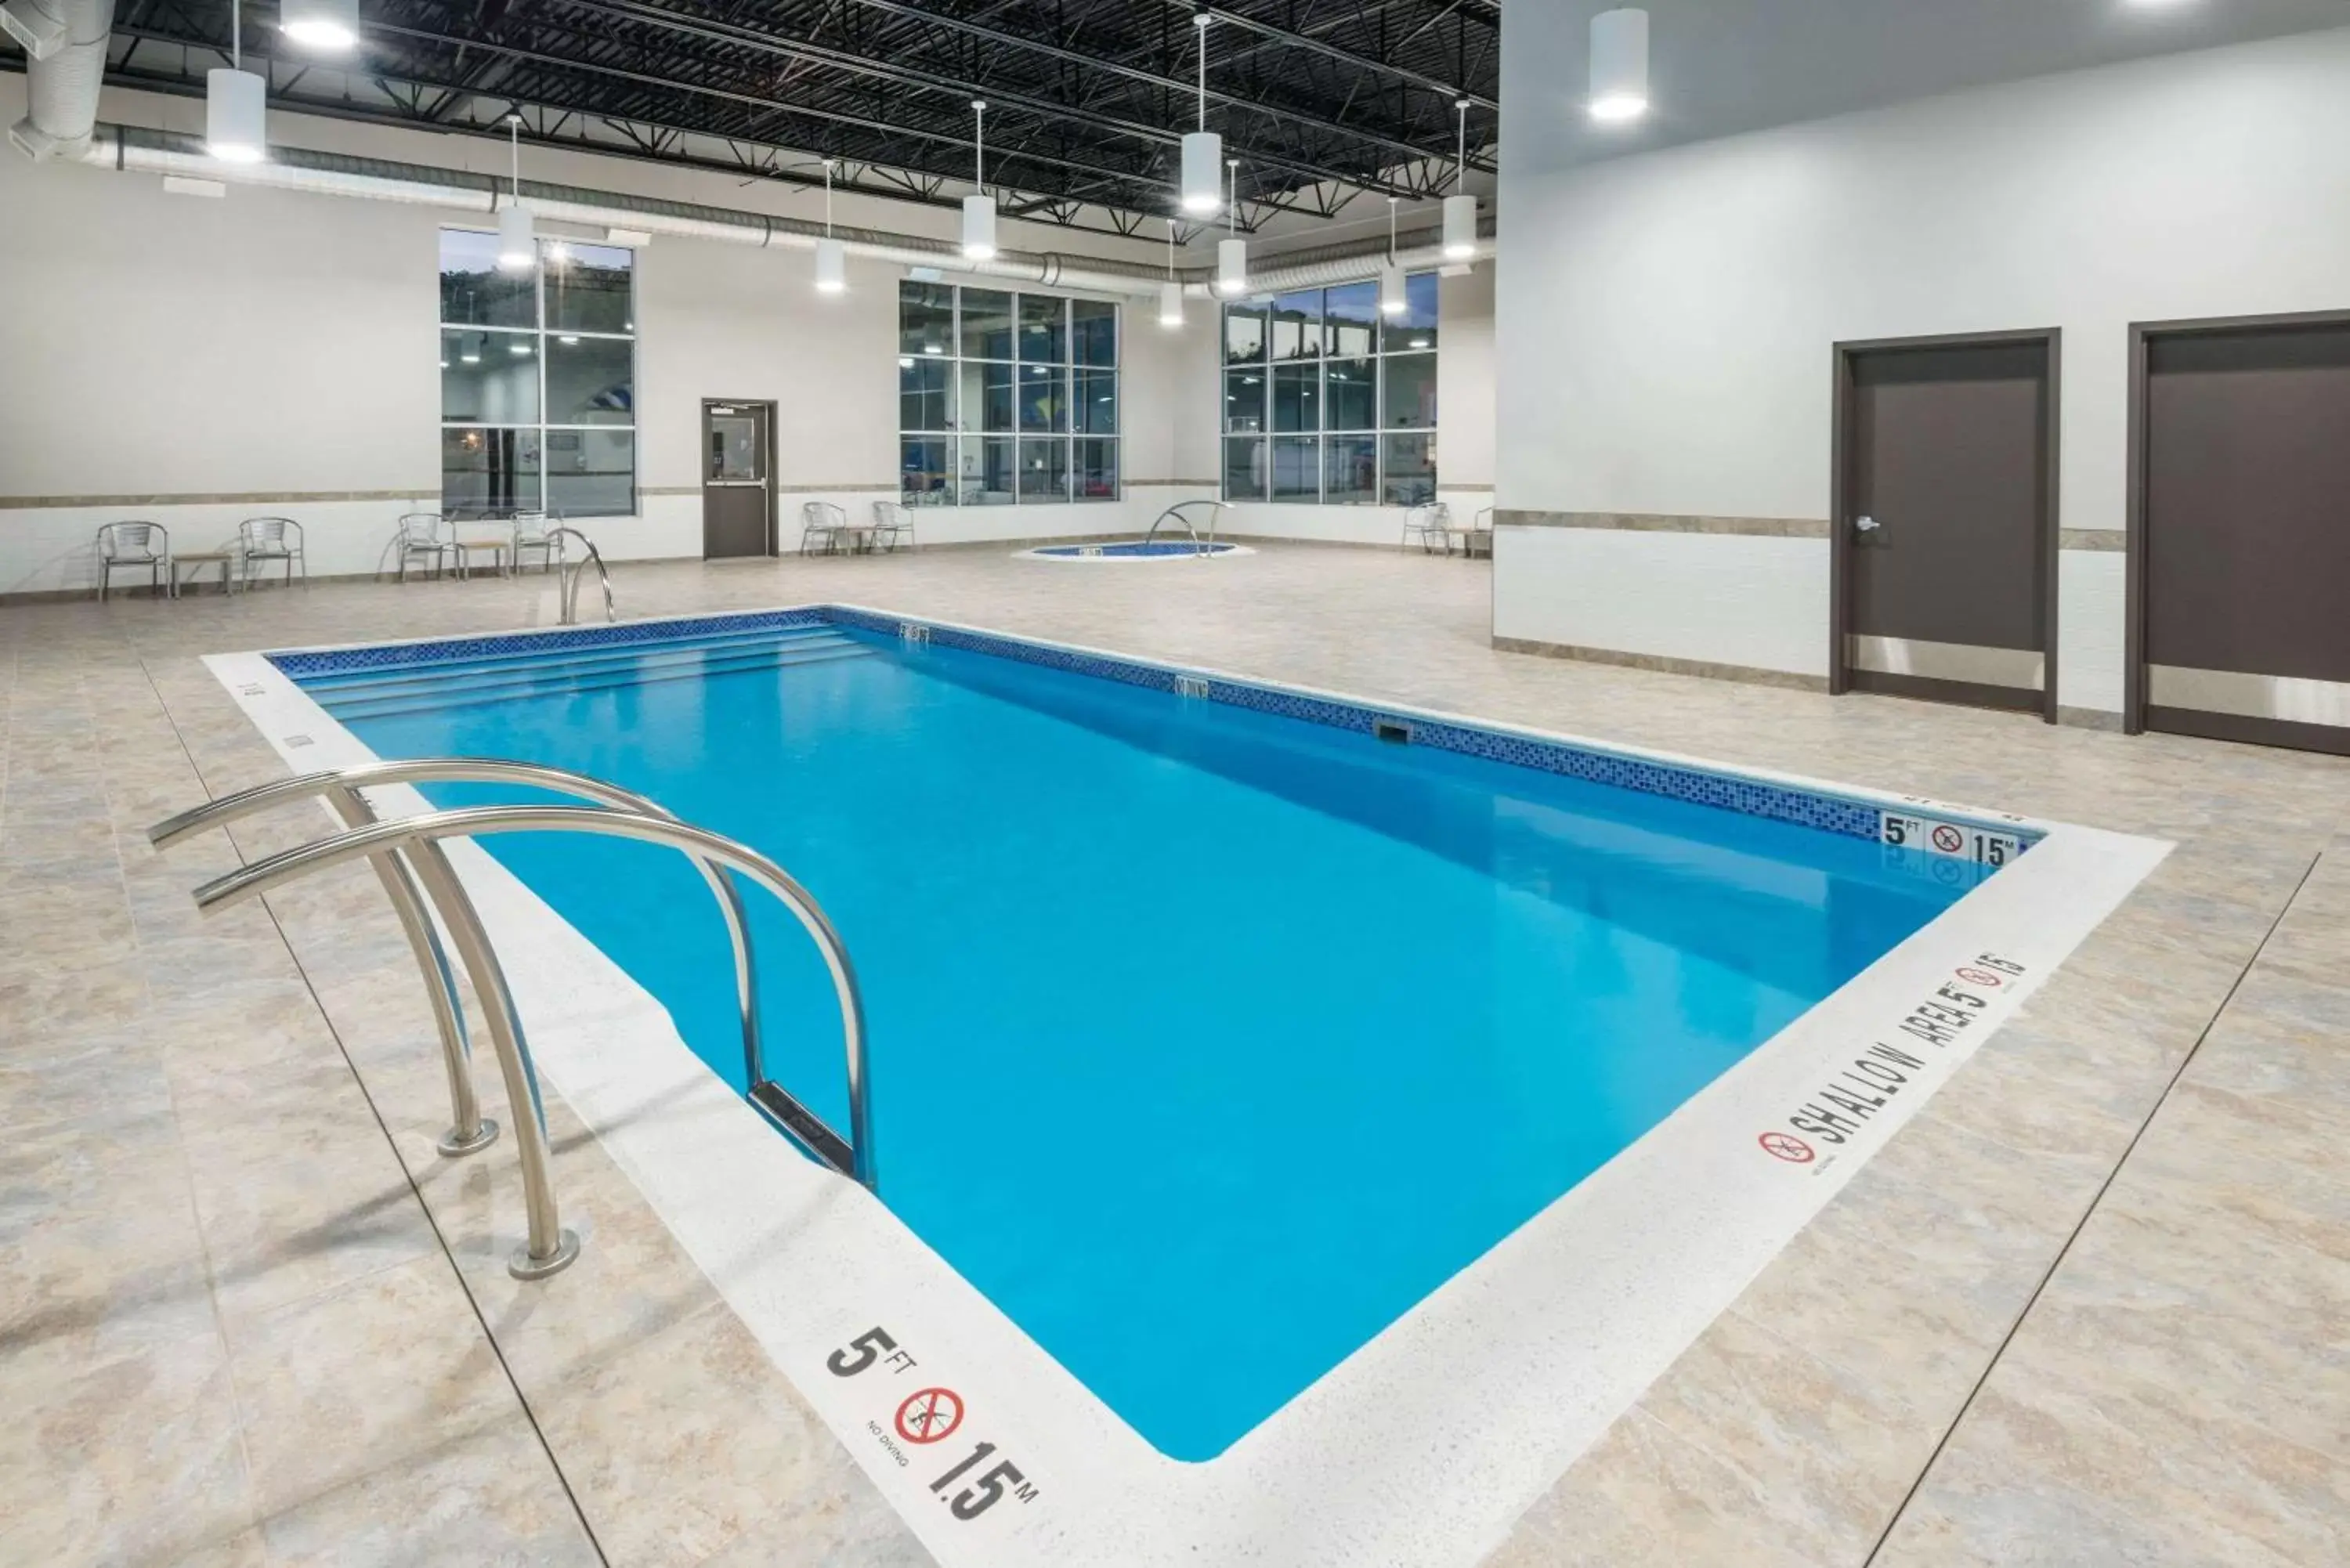 On site, Swimming Pool in Microtel Inn & Suites by Wyndham Sudbury